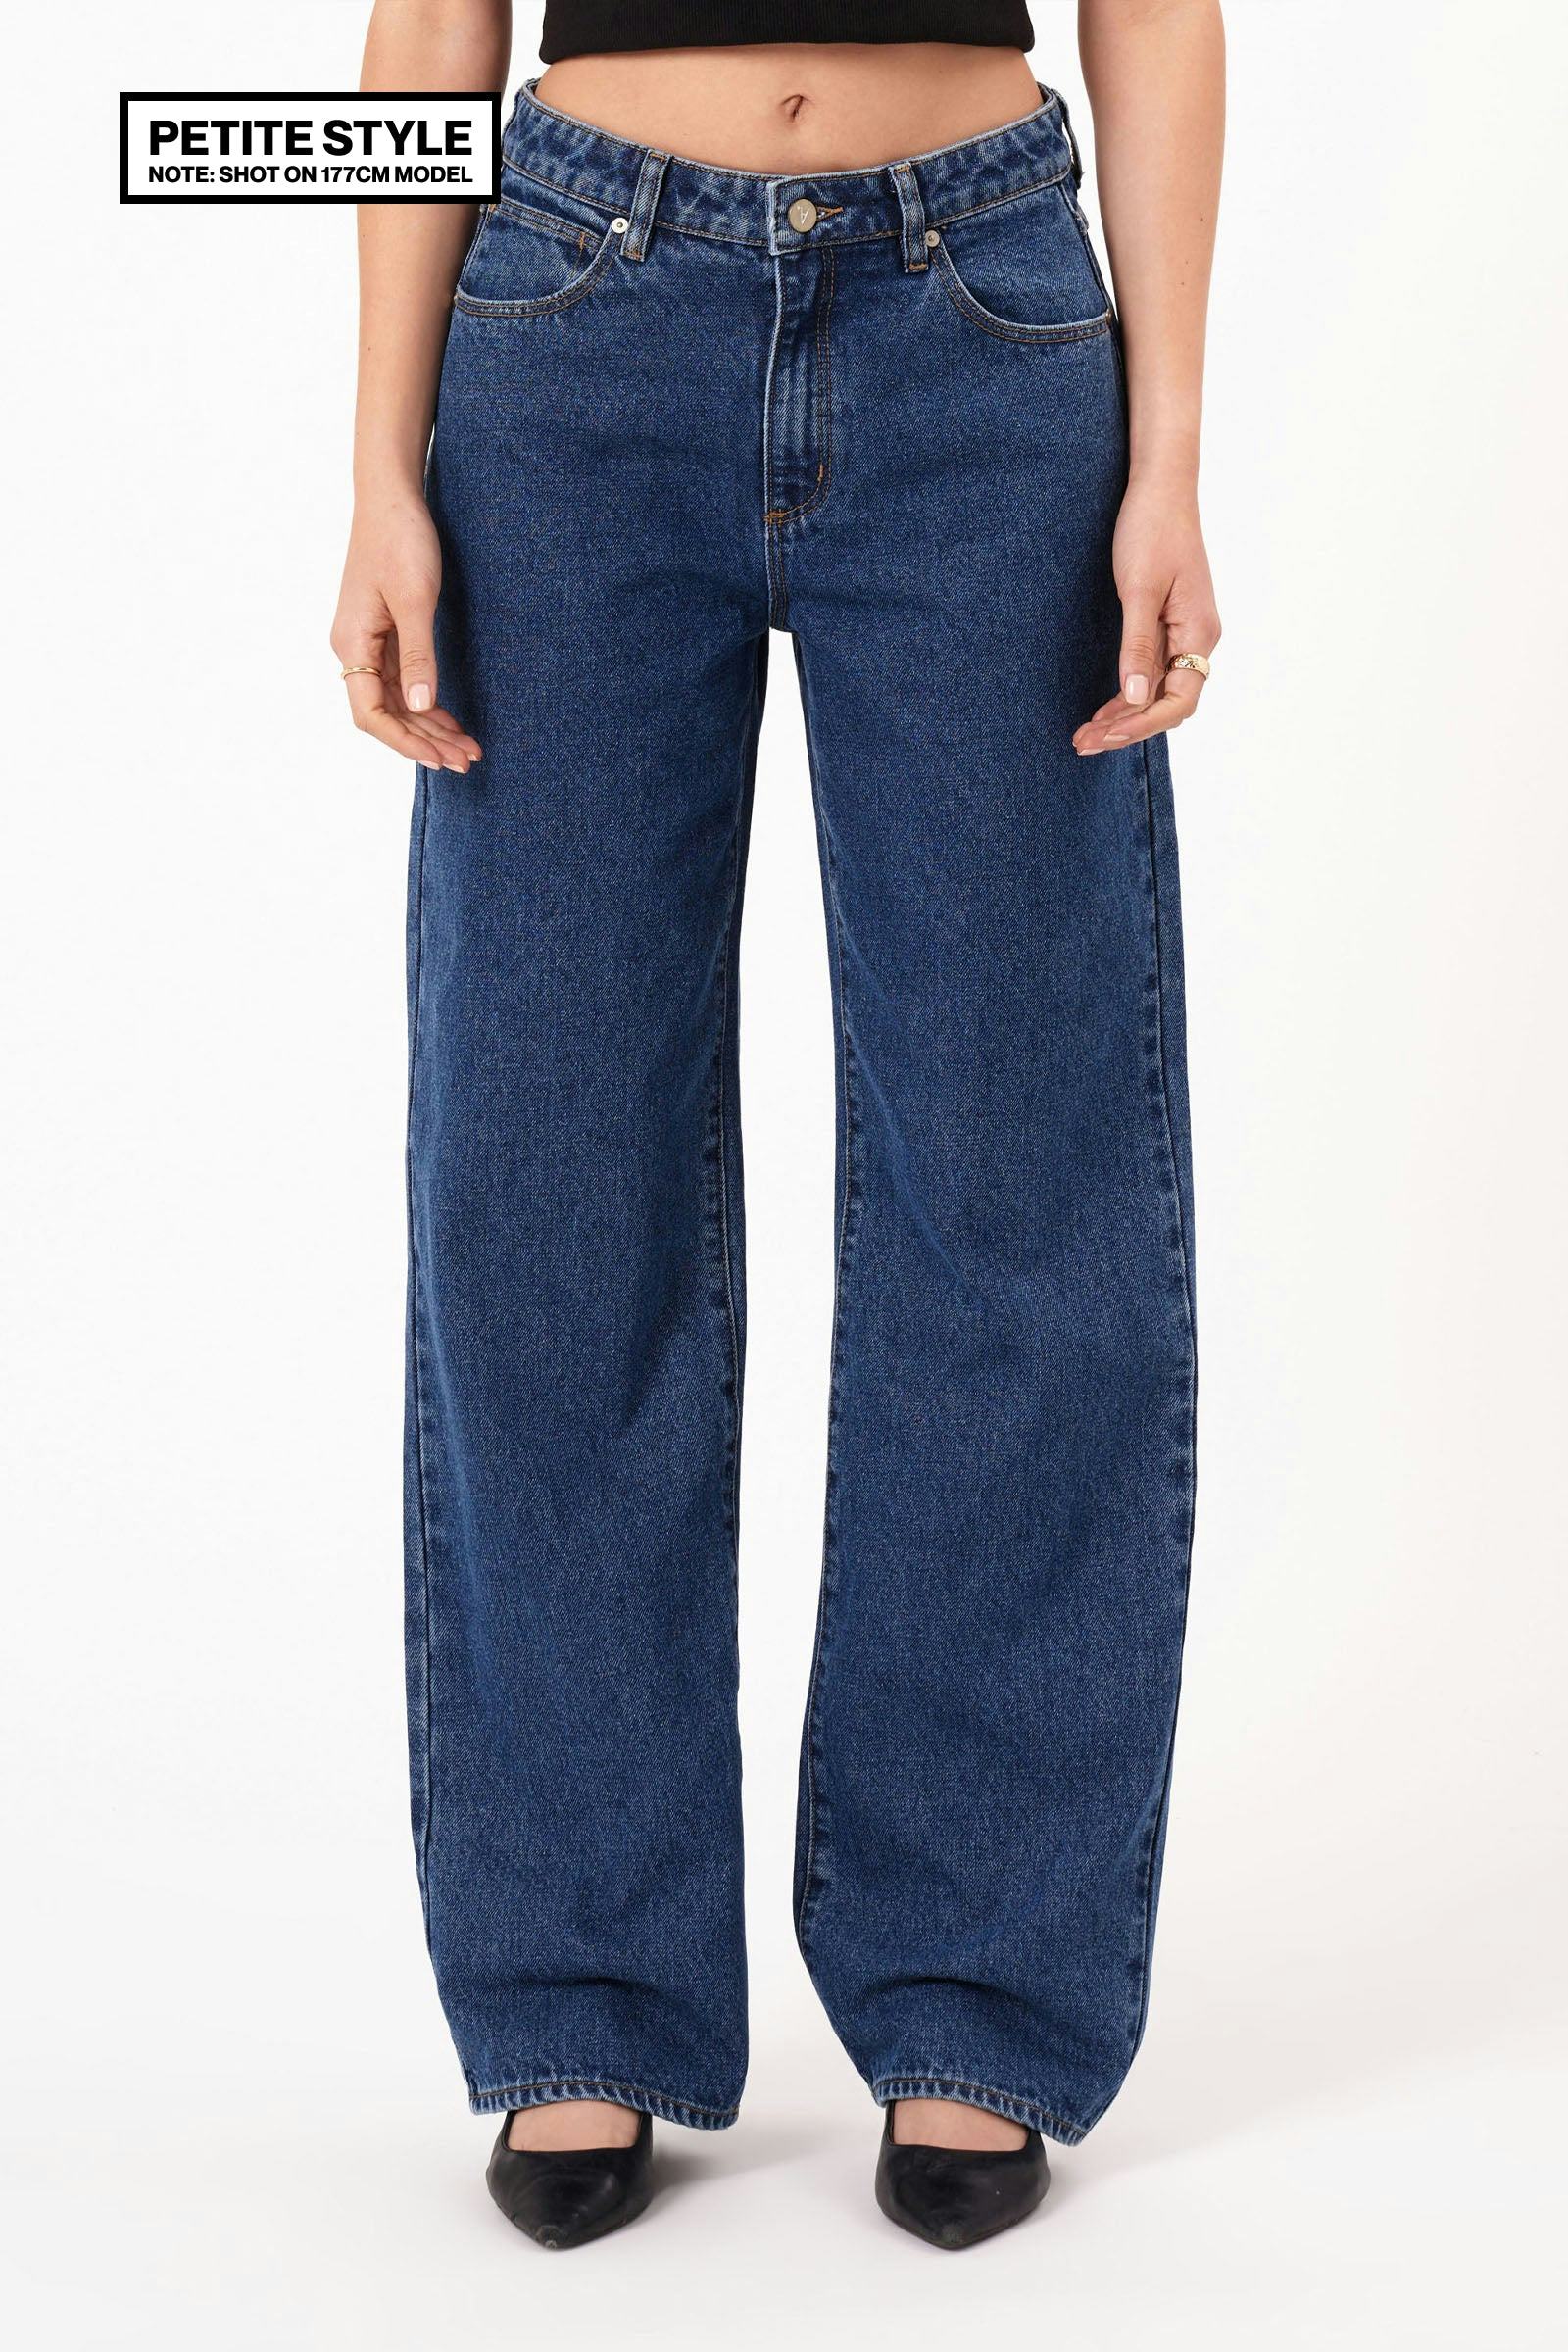 Jean Wide leg #Jean rígido #Jean anchos #moda Mitre 998 local 10